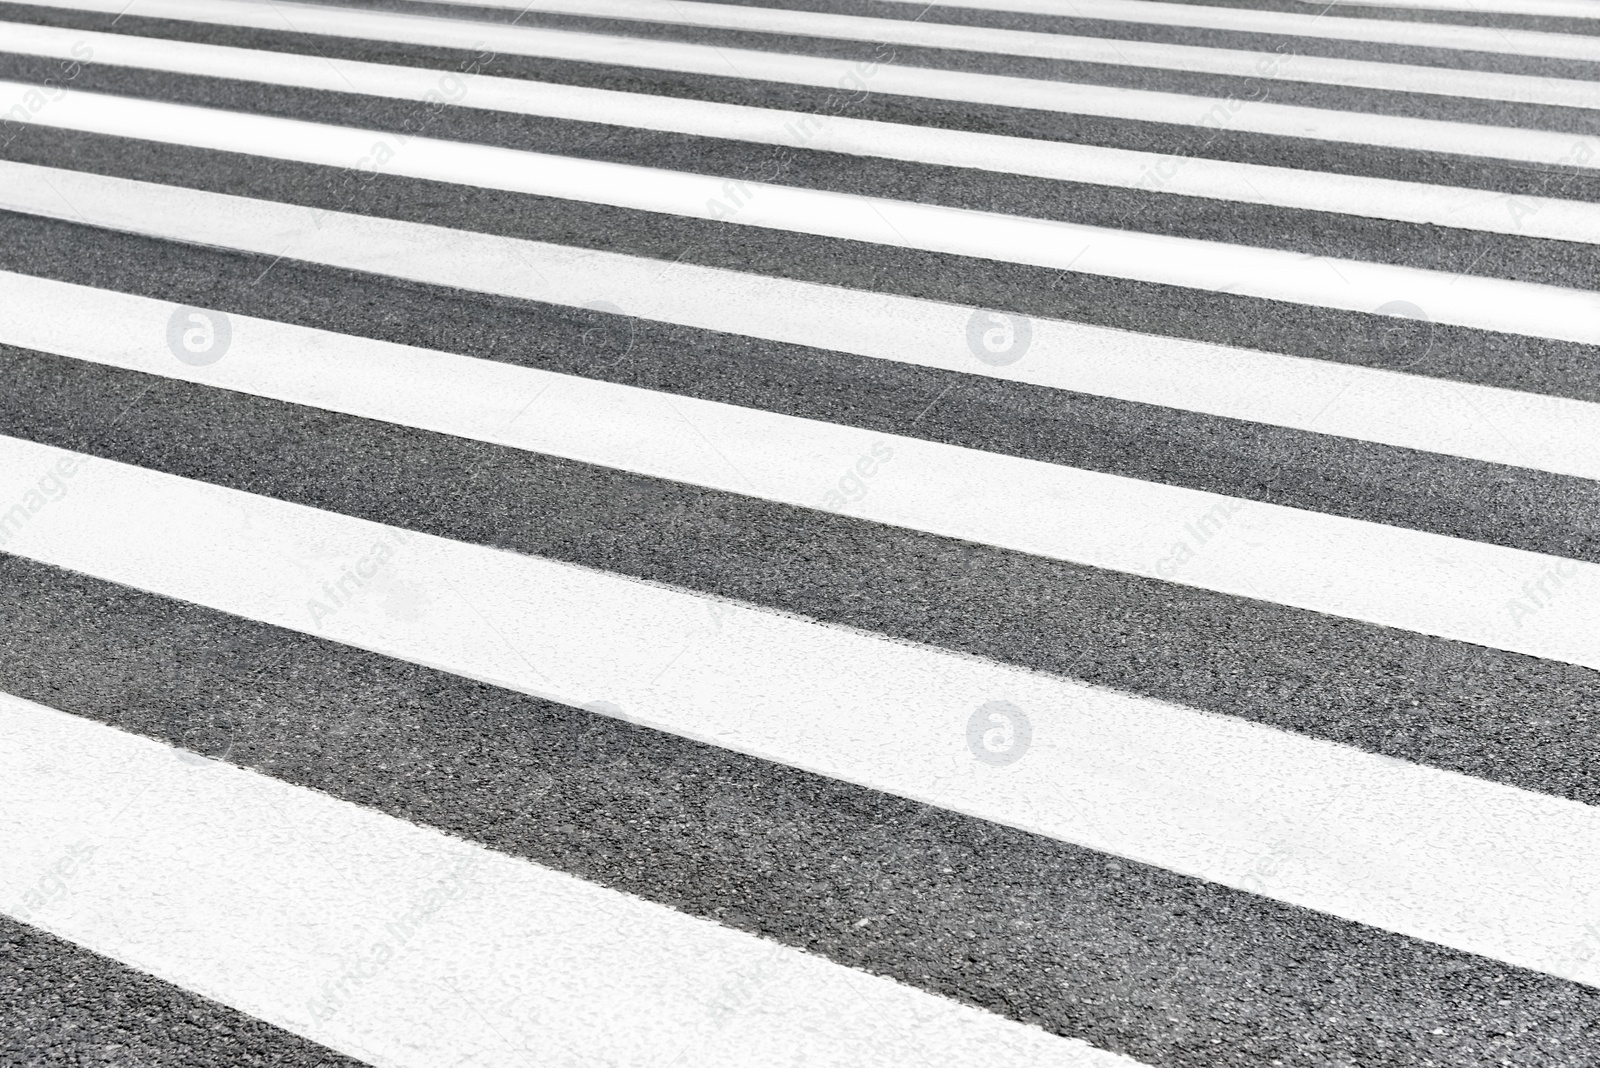 Photo of Pedestrian crossing on asphalt as background. Road regulations